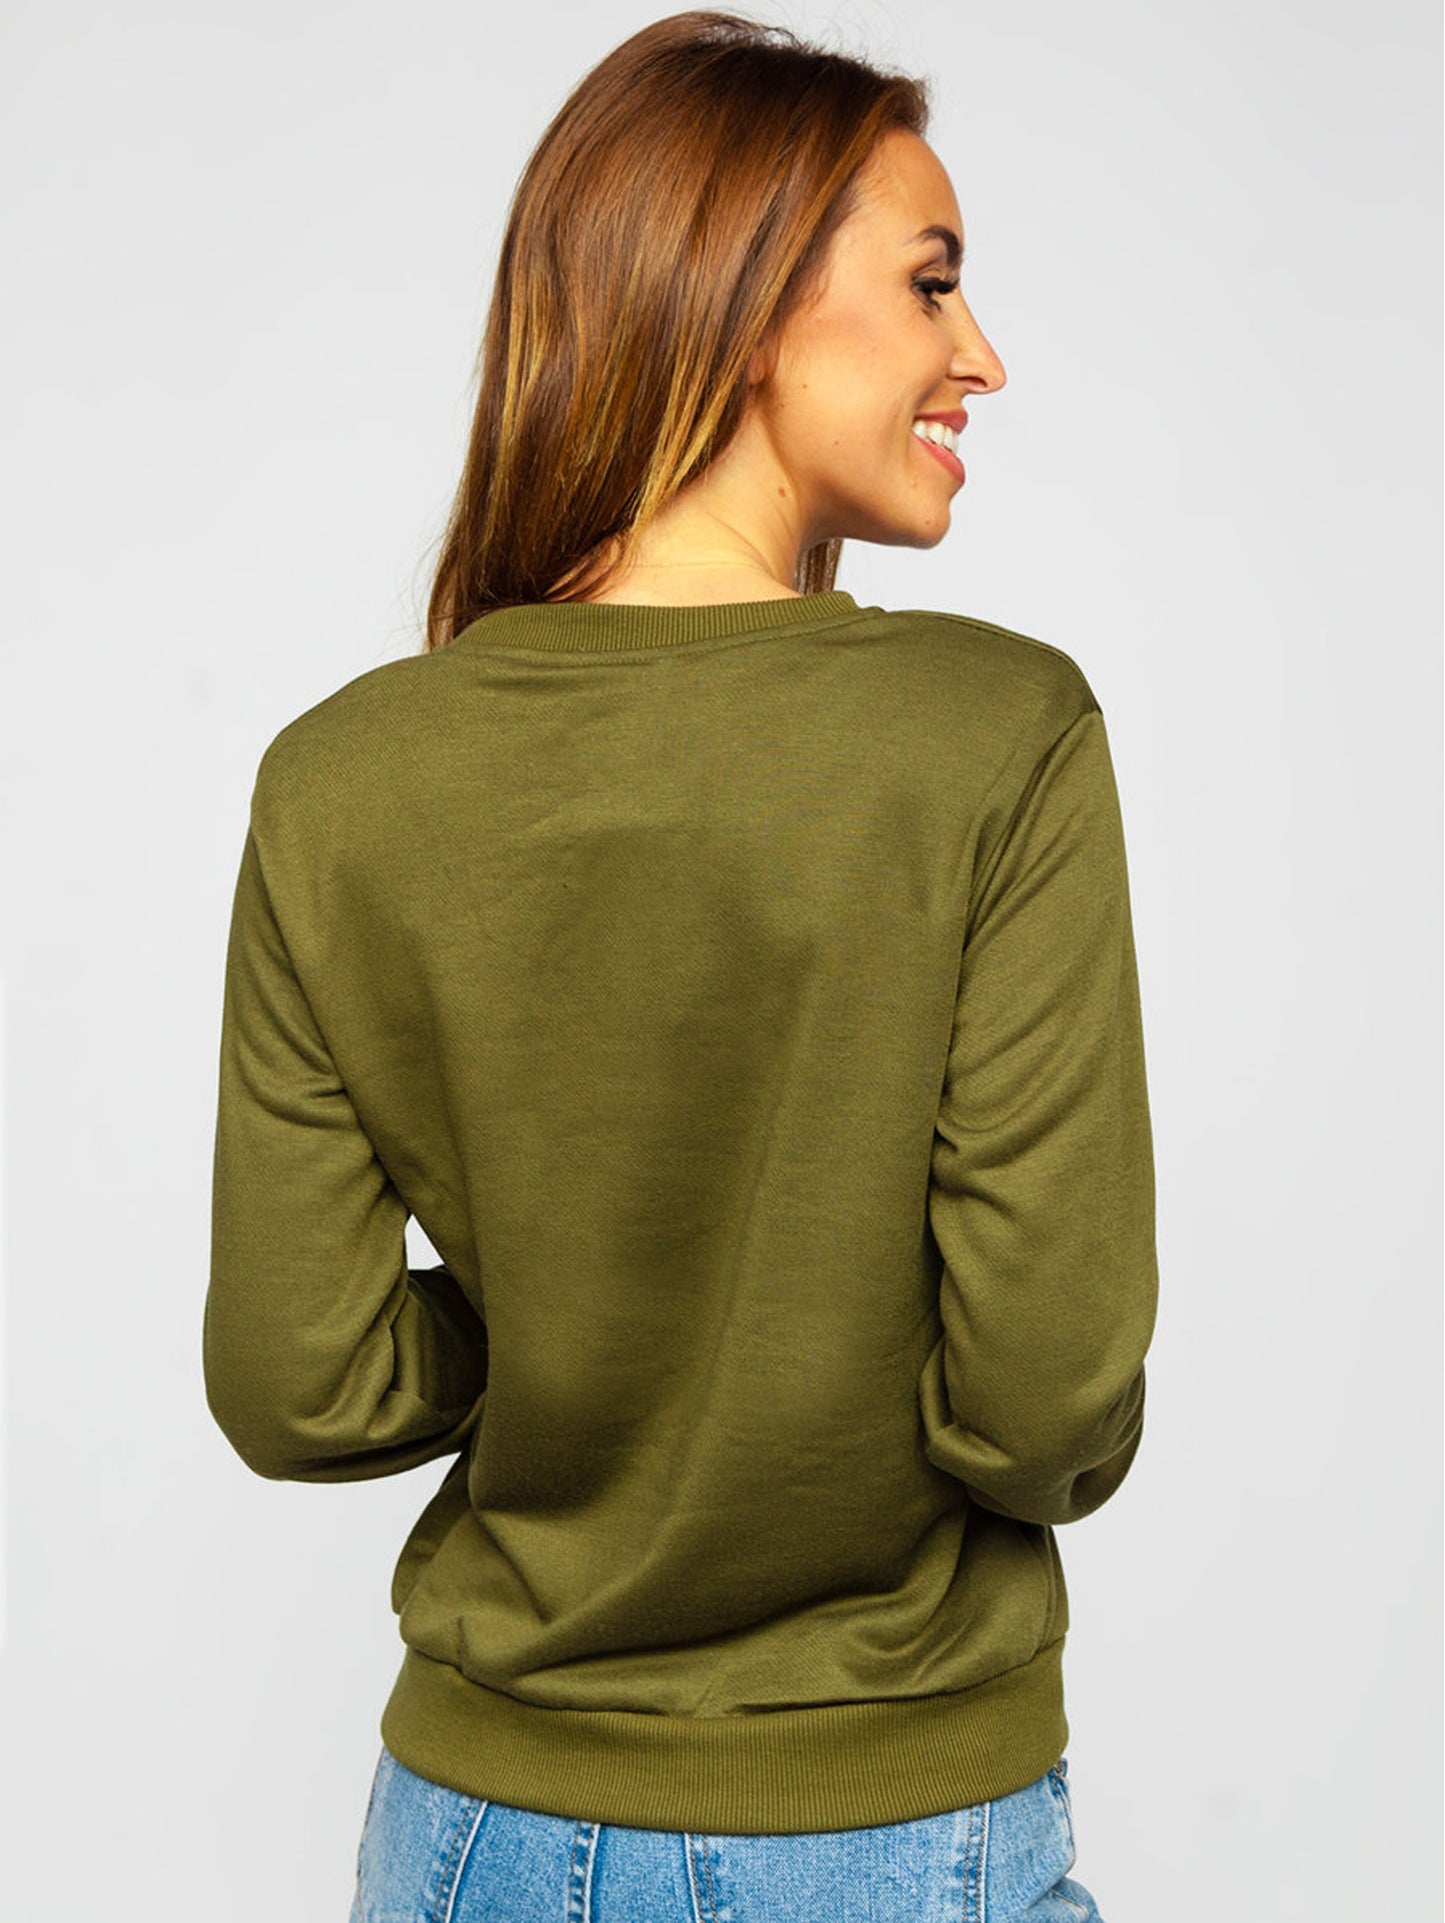 Women's Army Green Sweatshirt